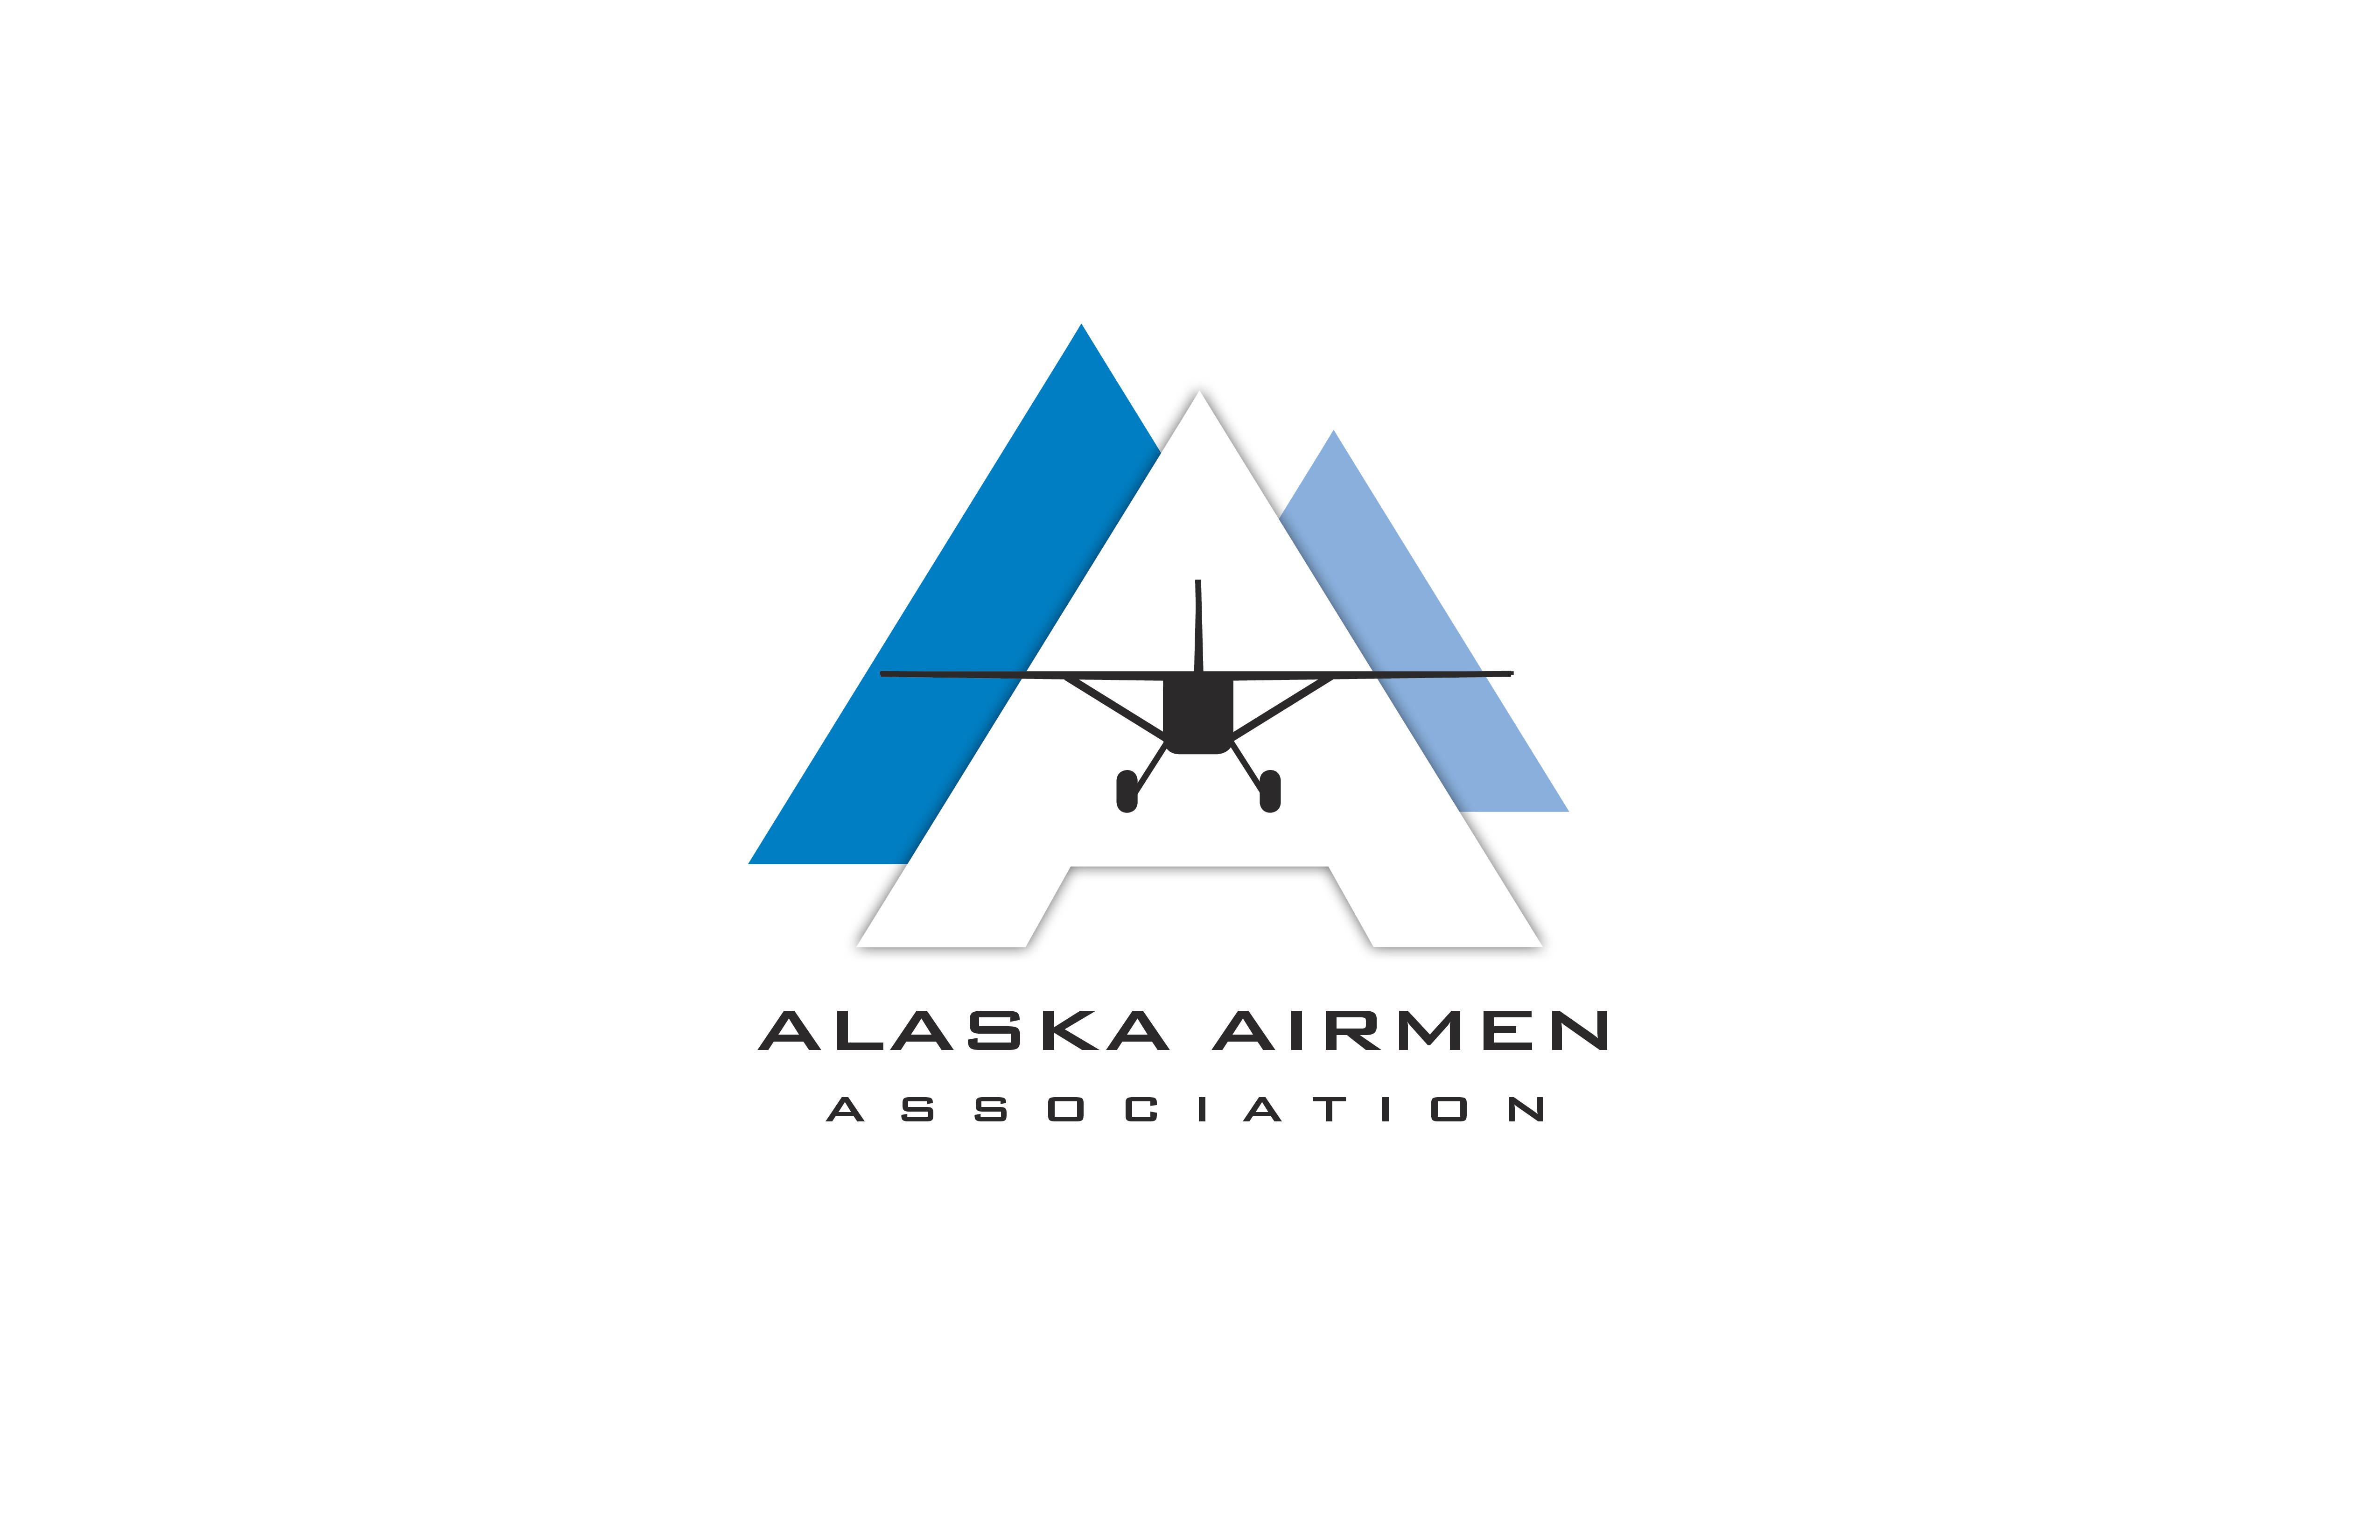 Alaska Airmen Association has 2,200 members in Alaska and the Lower 48 promoting general aviation.